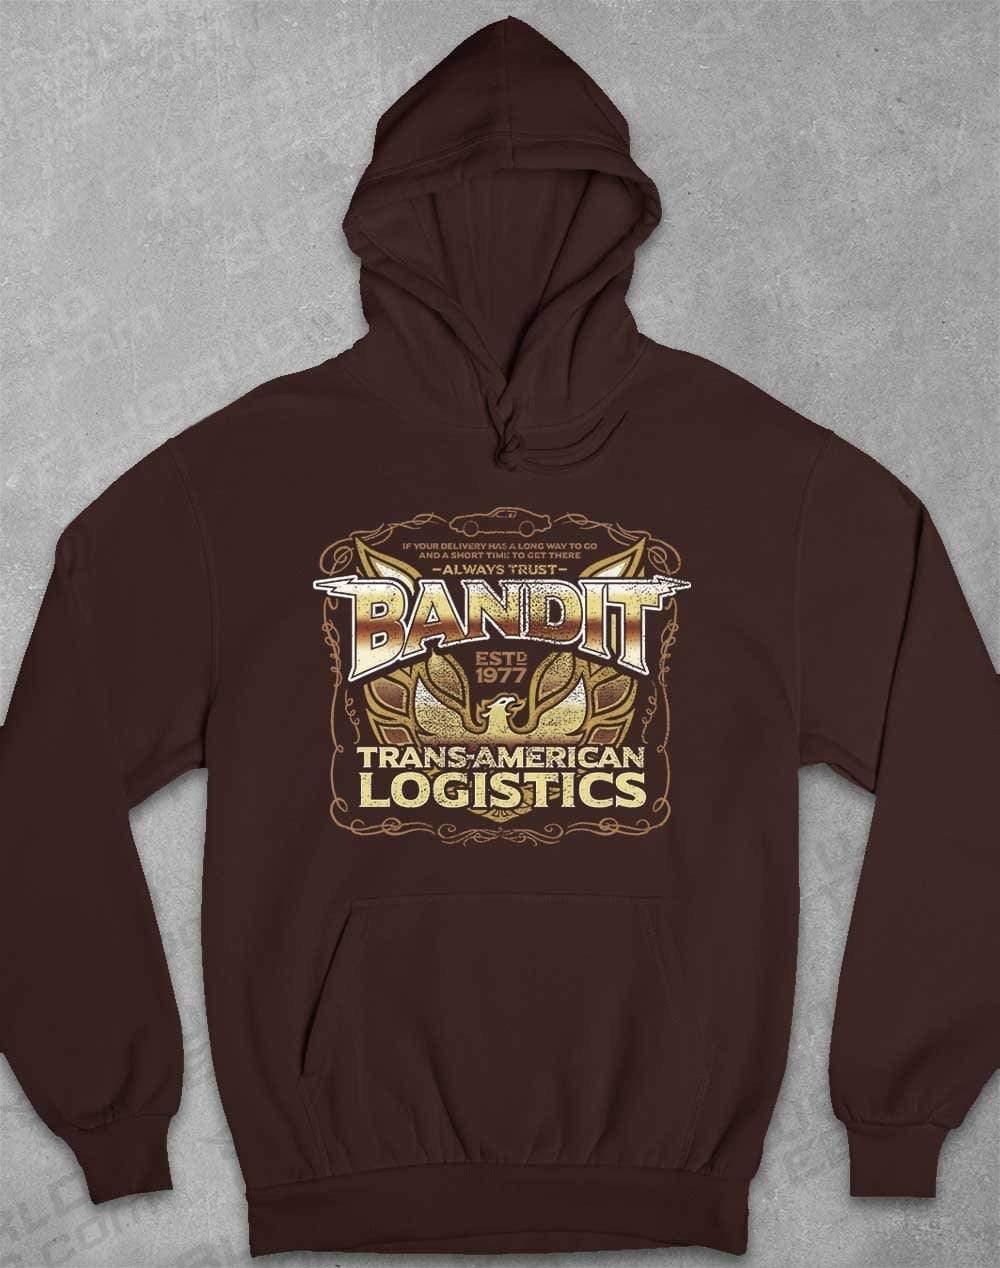 Bandit Logistics 1977 Hoodie XS / Hot Chocolate  - Off World Tees